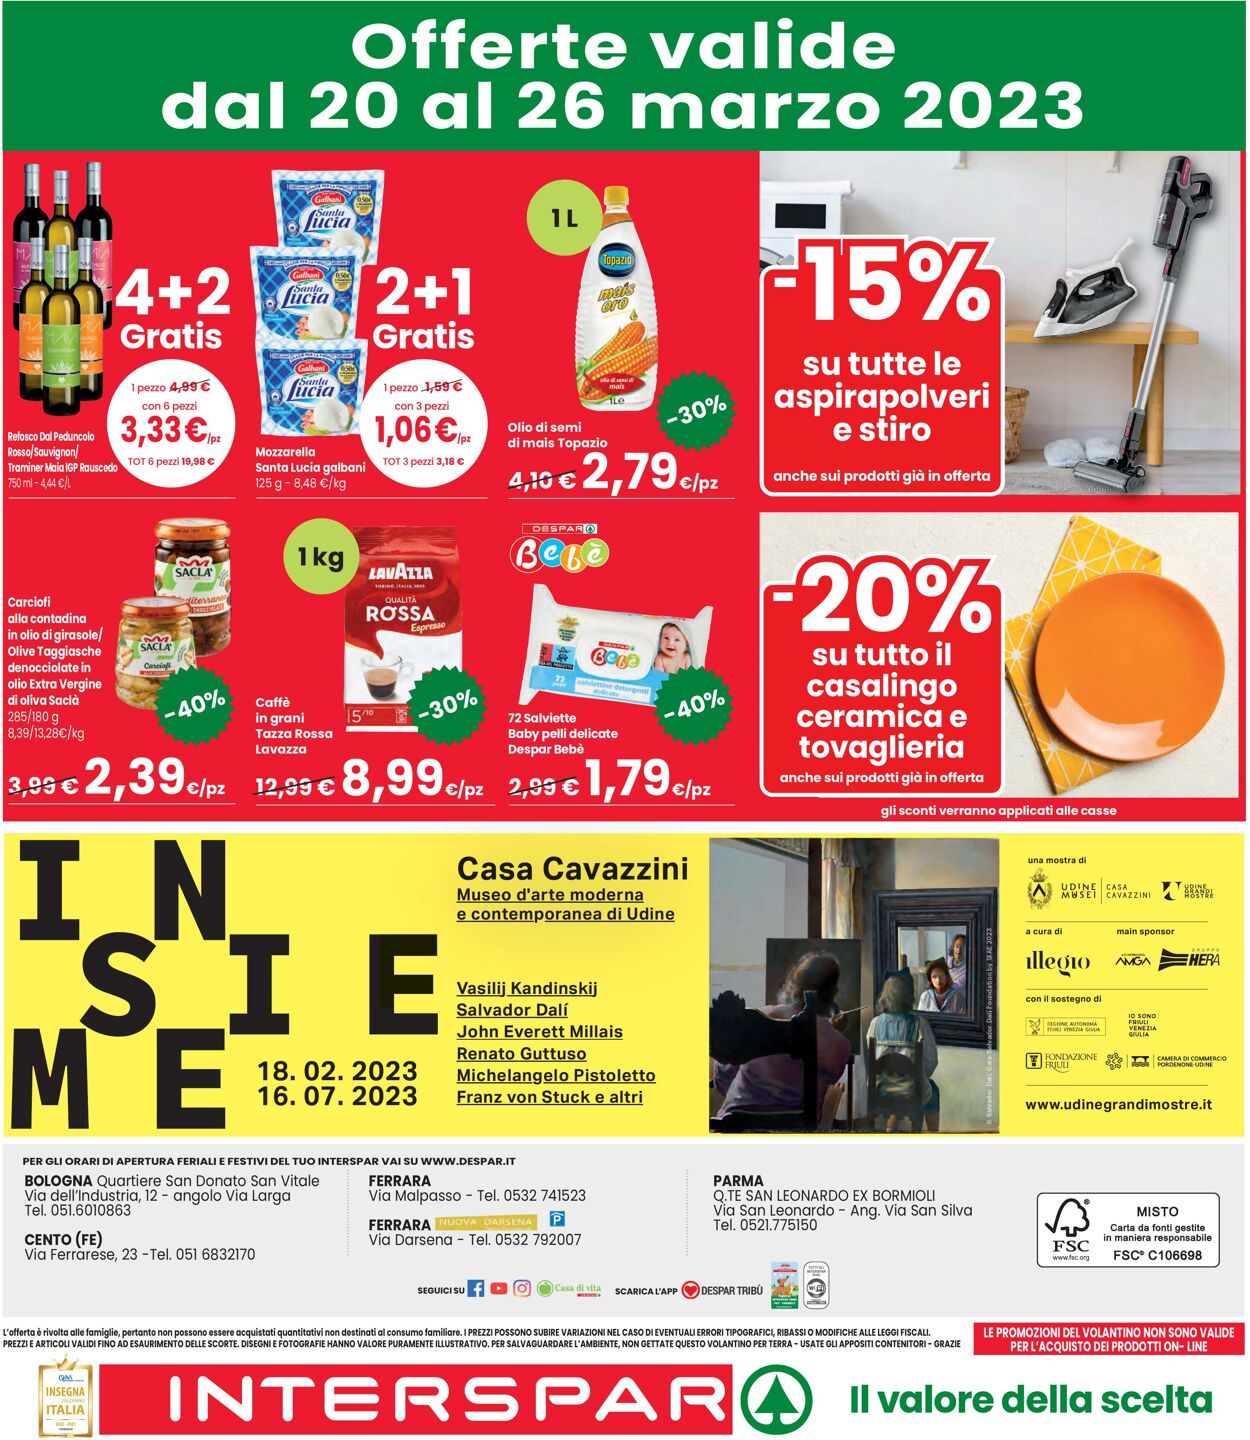 Volantino Interspar 13.03.2023 - 26.03.2023